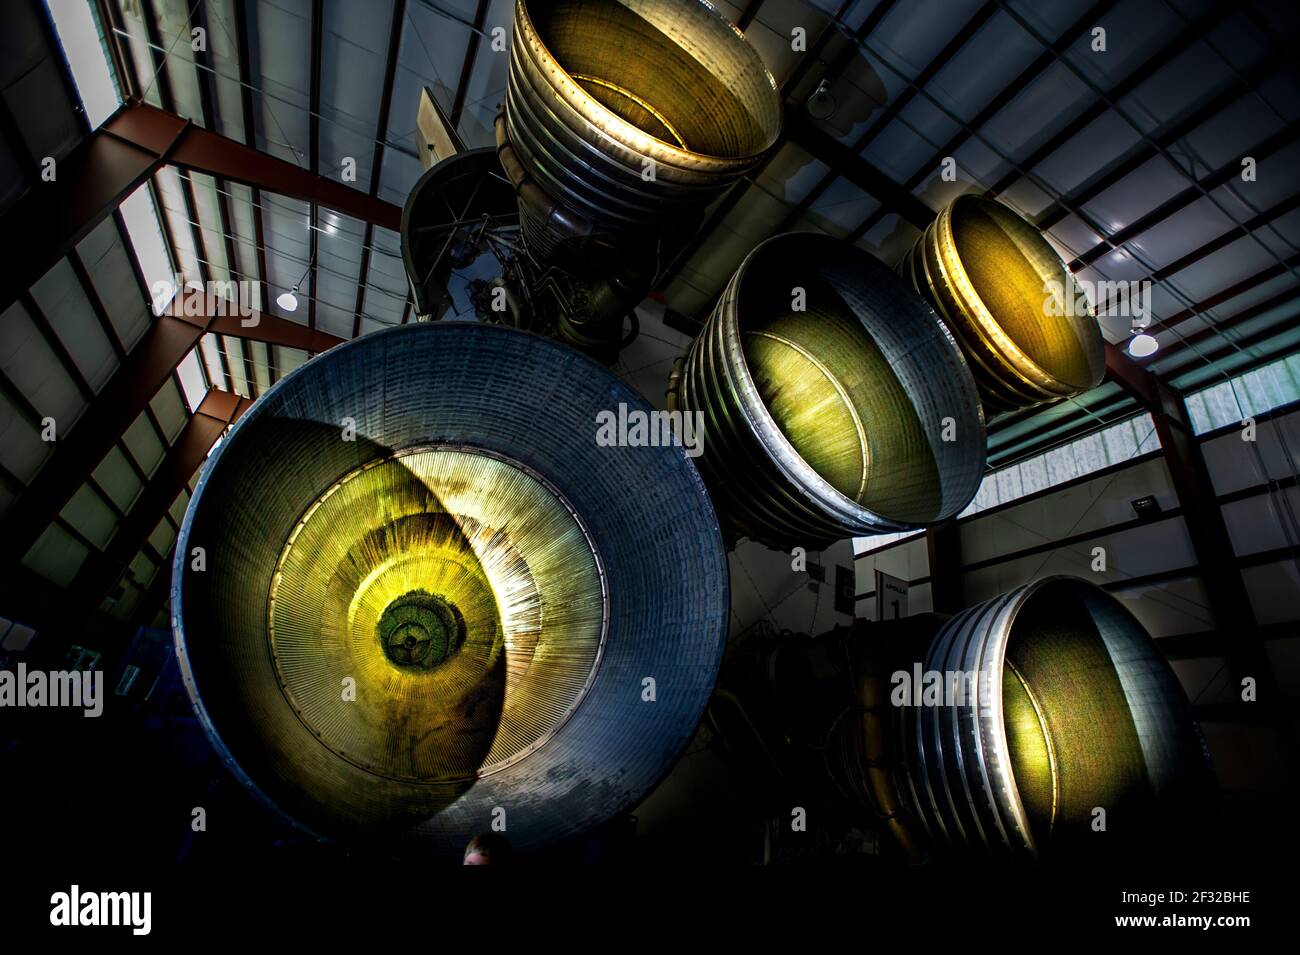 NASA Saturn Rocket engines at the Space Center Houston Texas Stock Photo